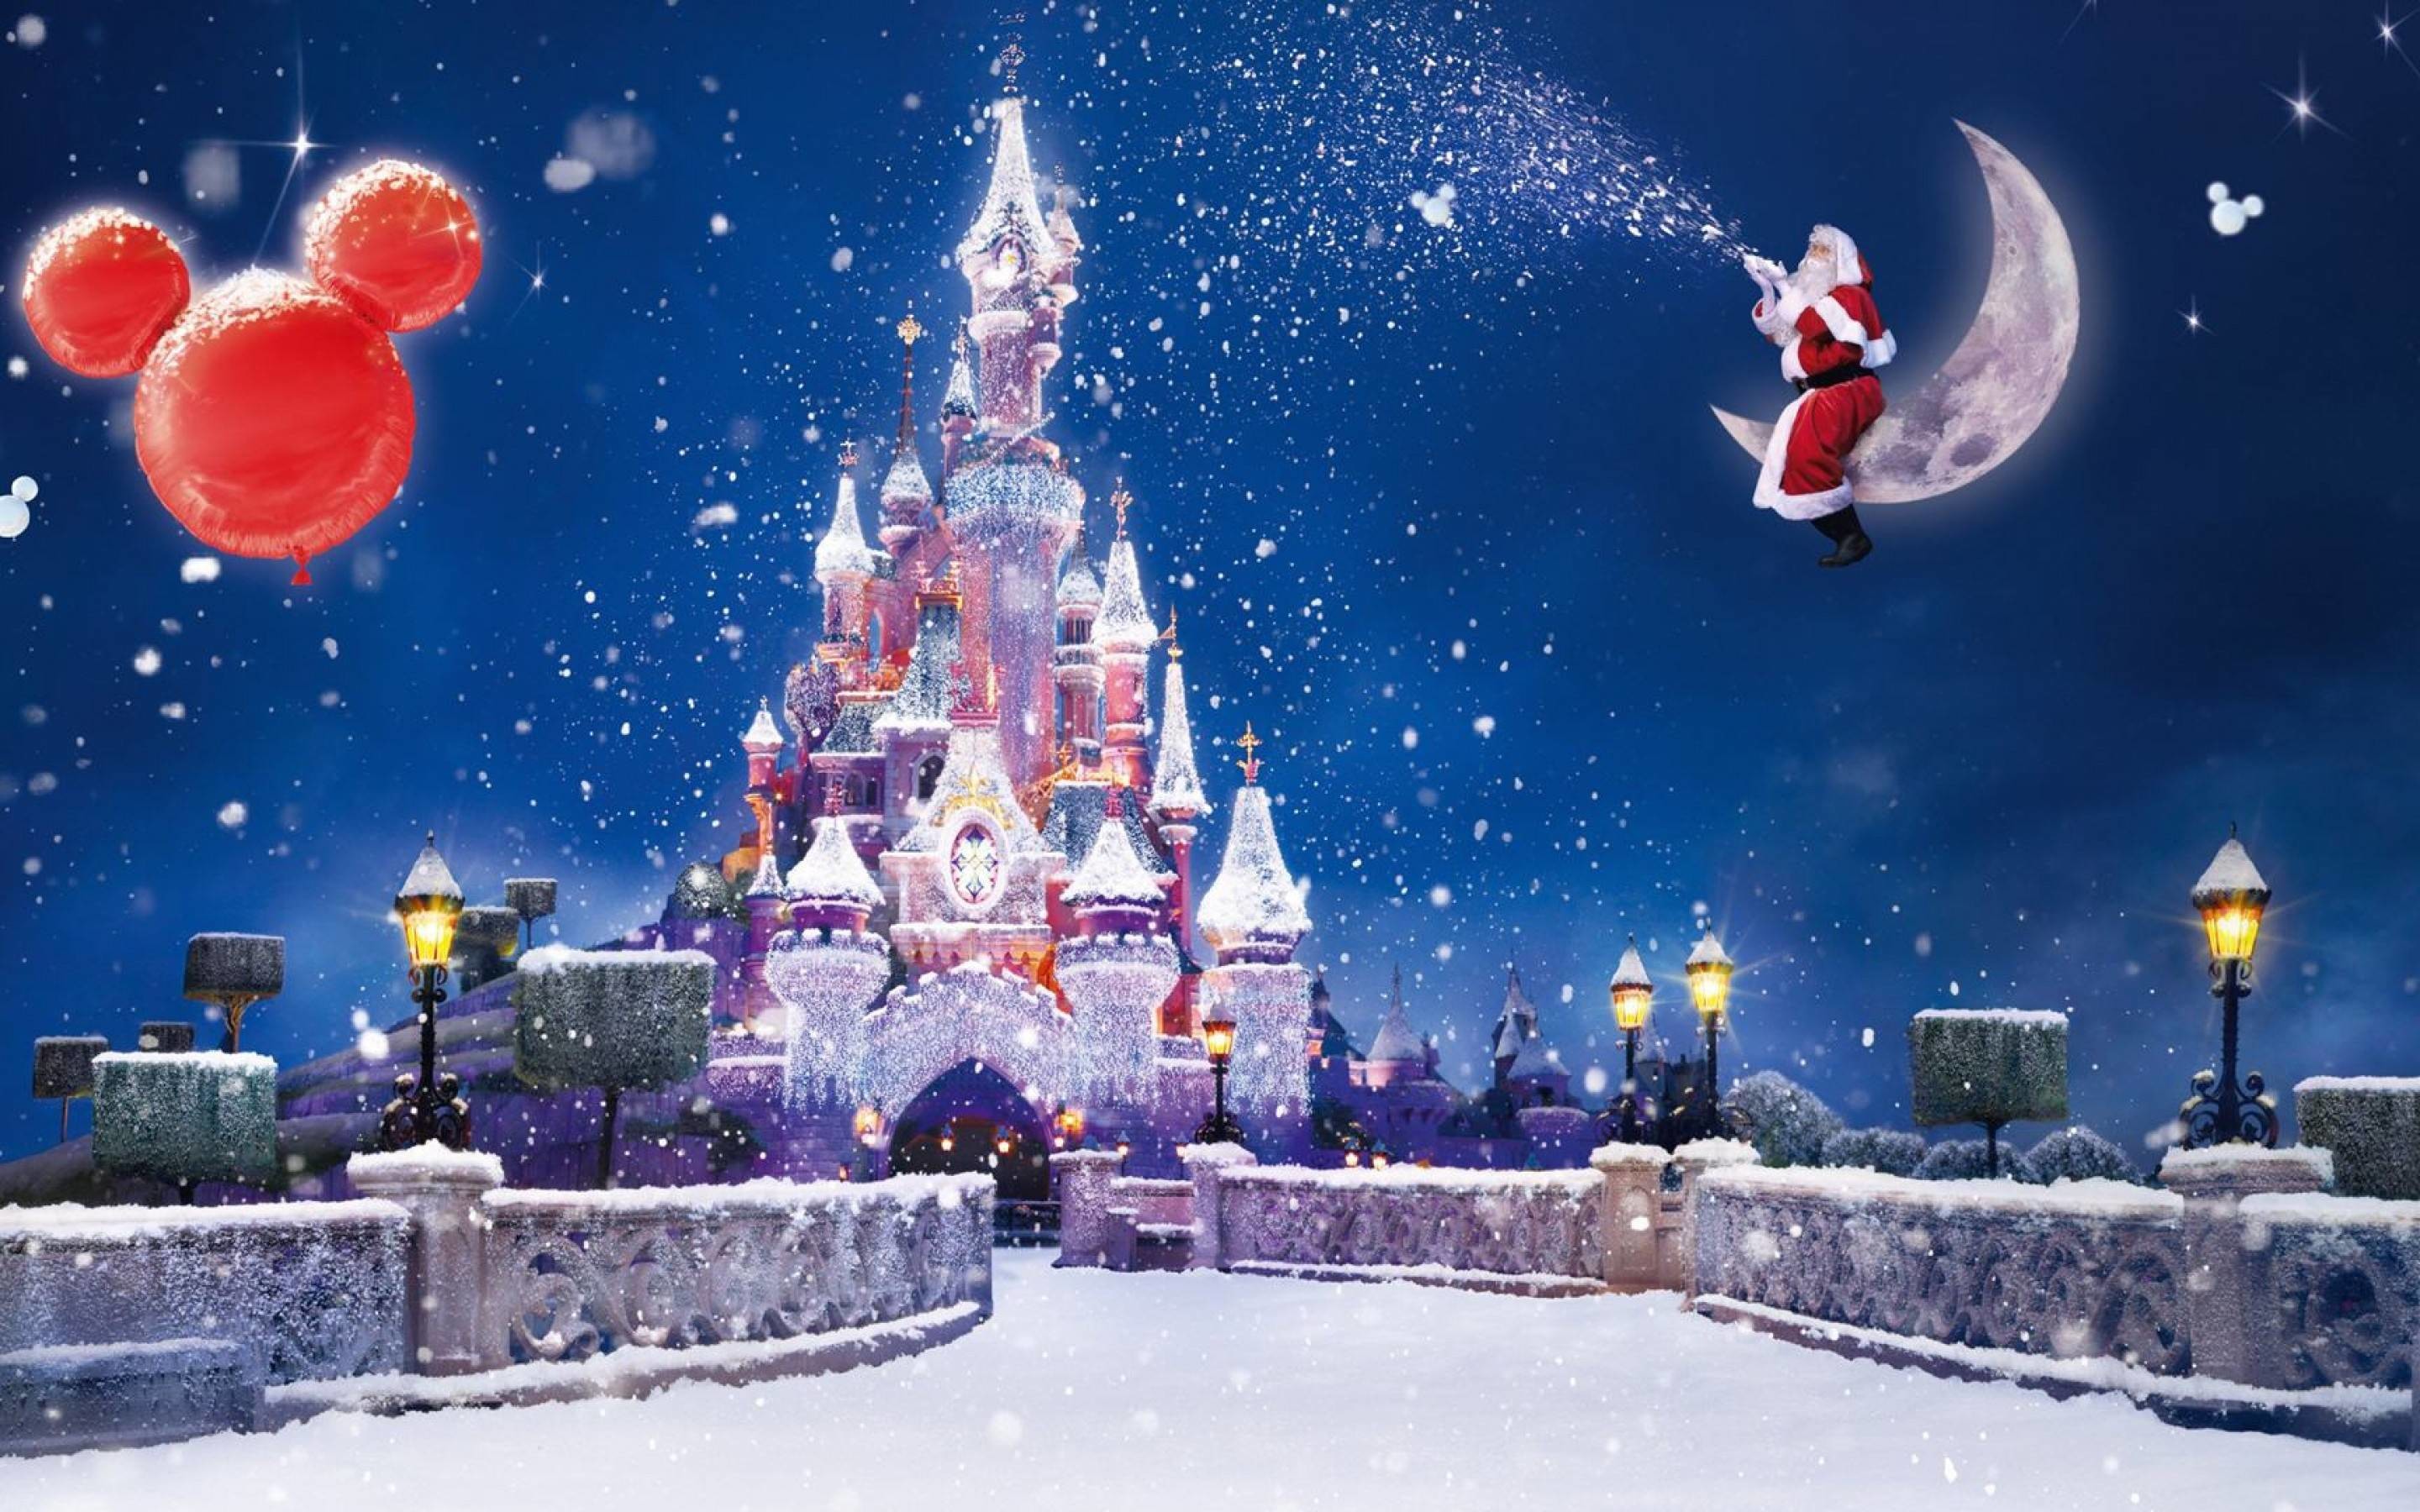 Disney Christmas Wallpapers – Full HD wallpaper search –